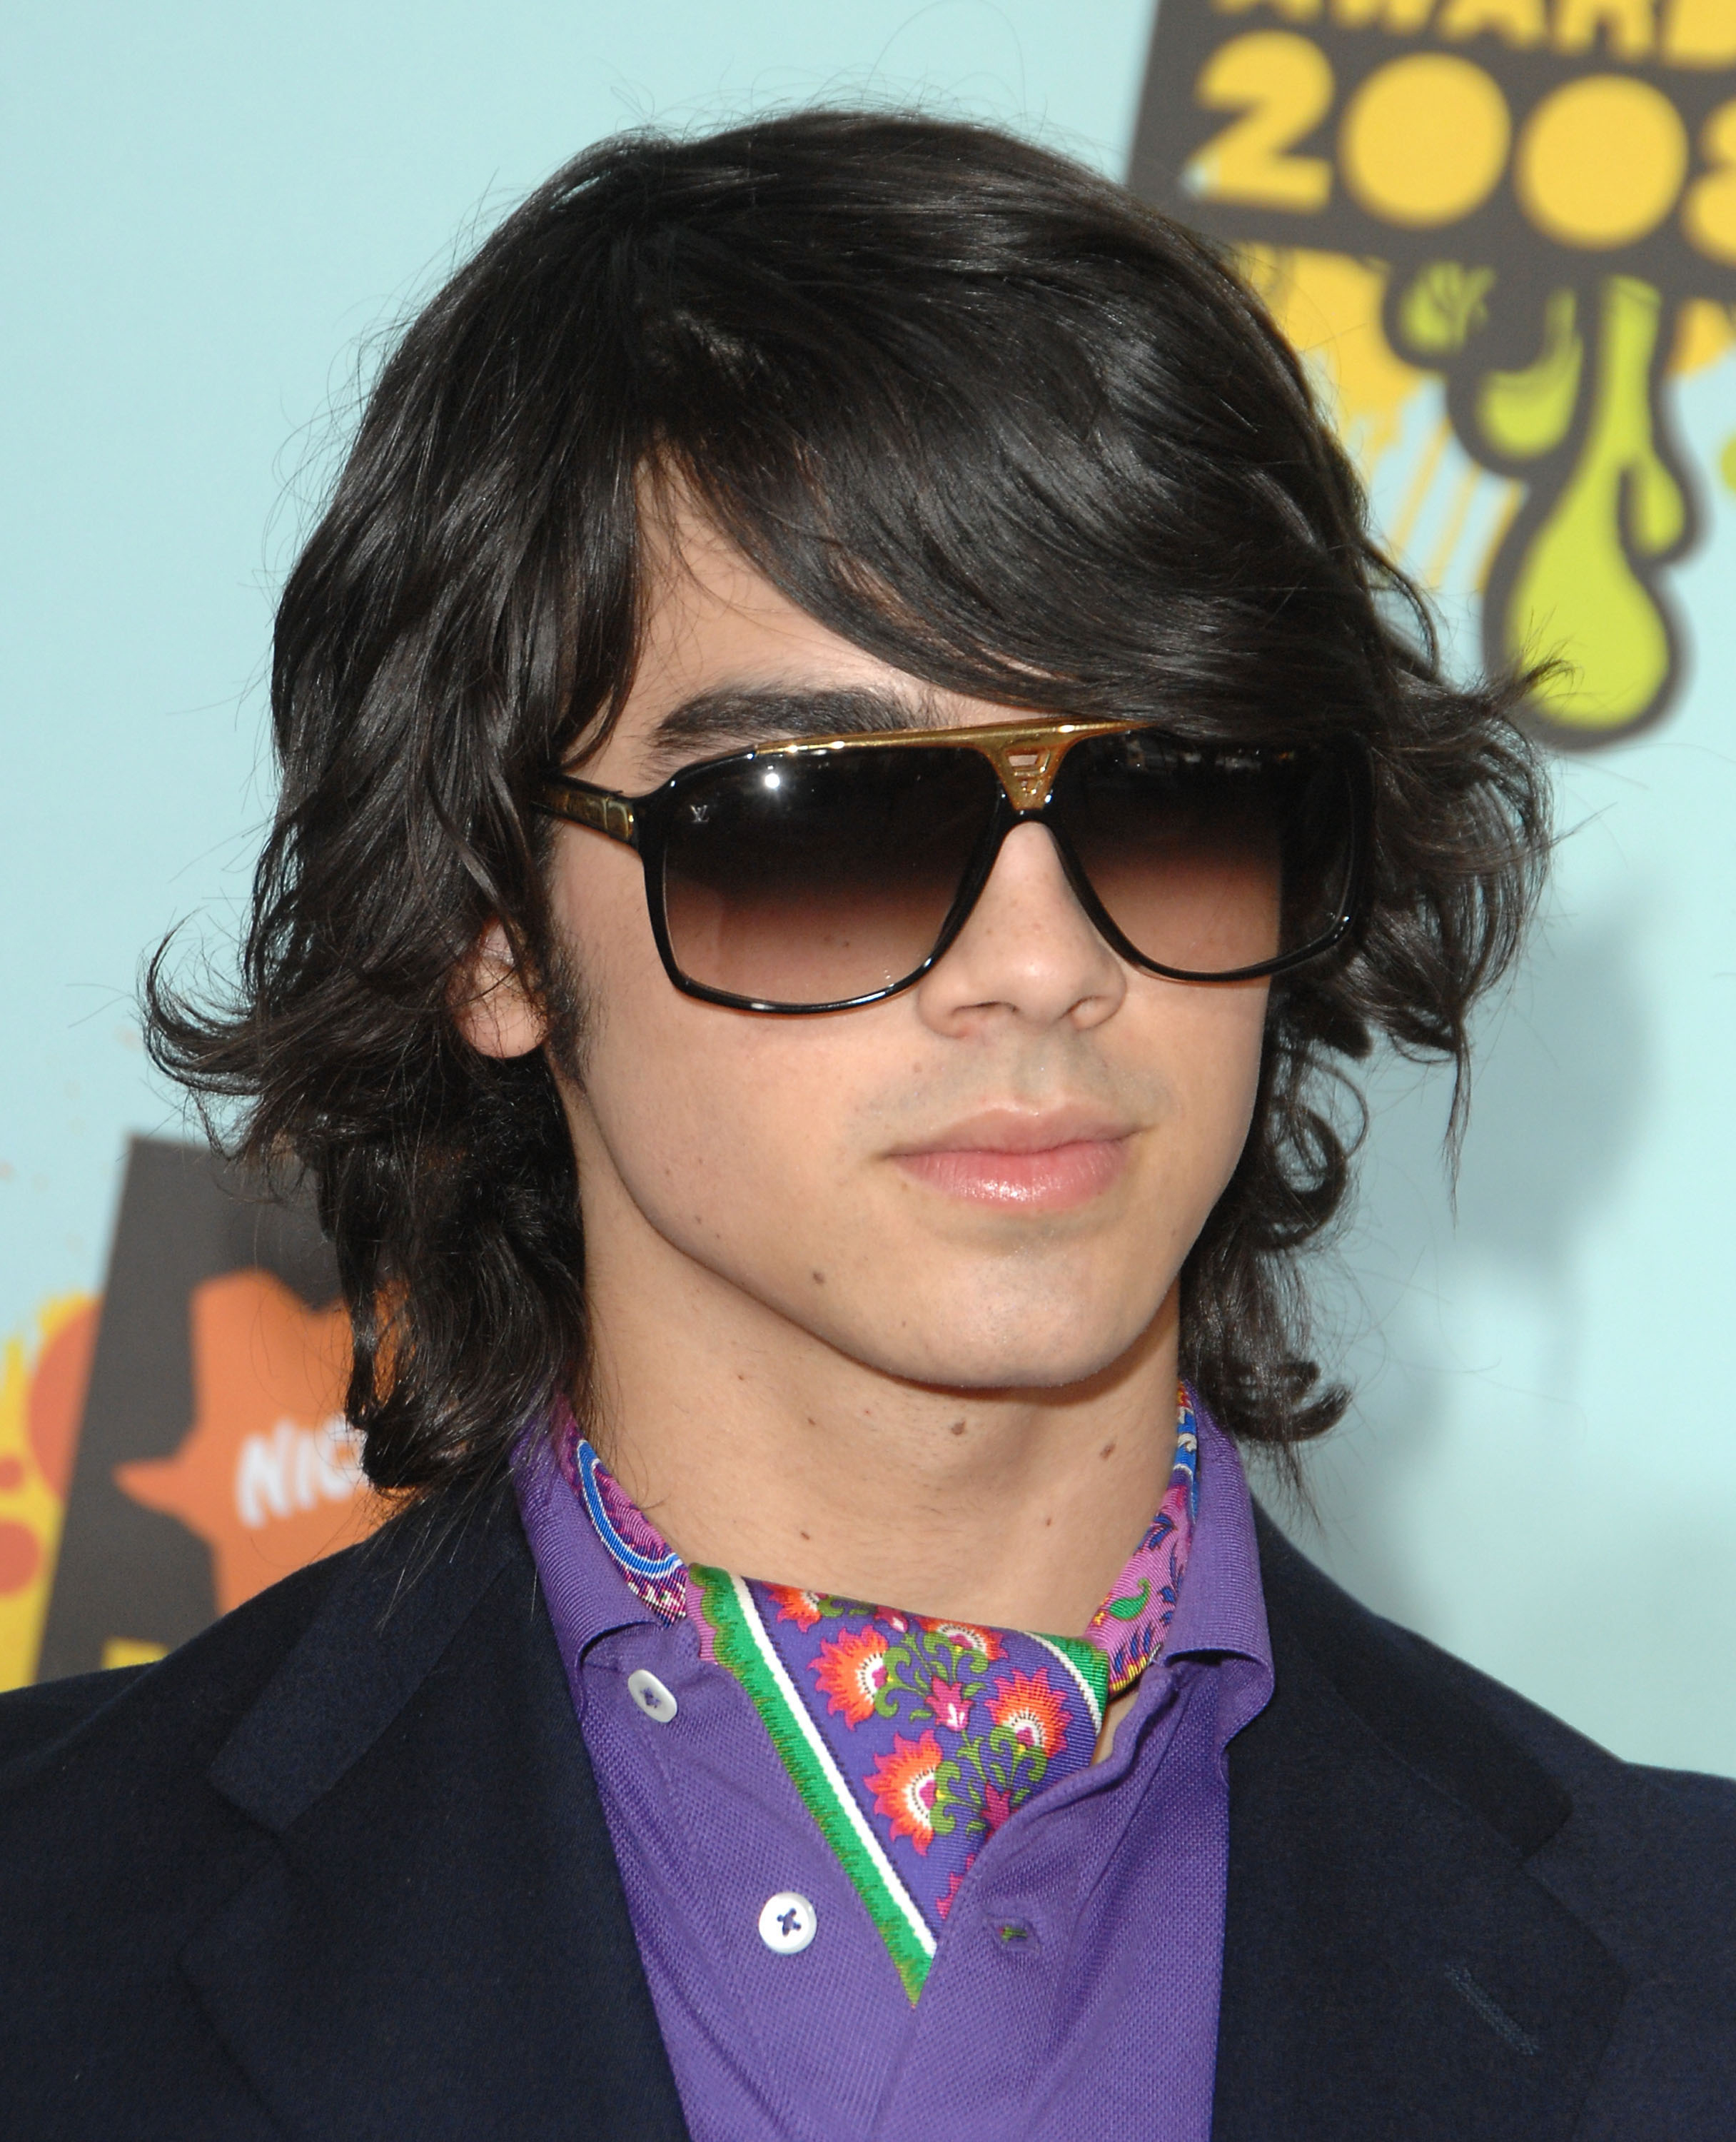 Close-up of Joe wearing sunglasses